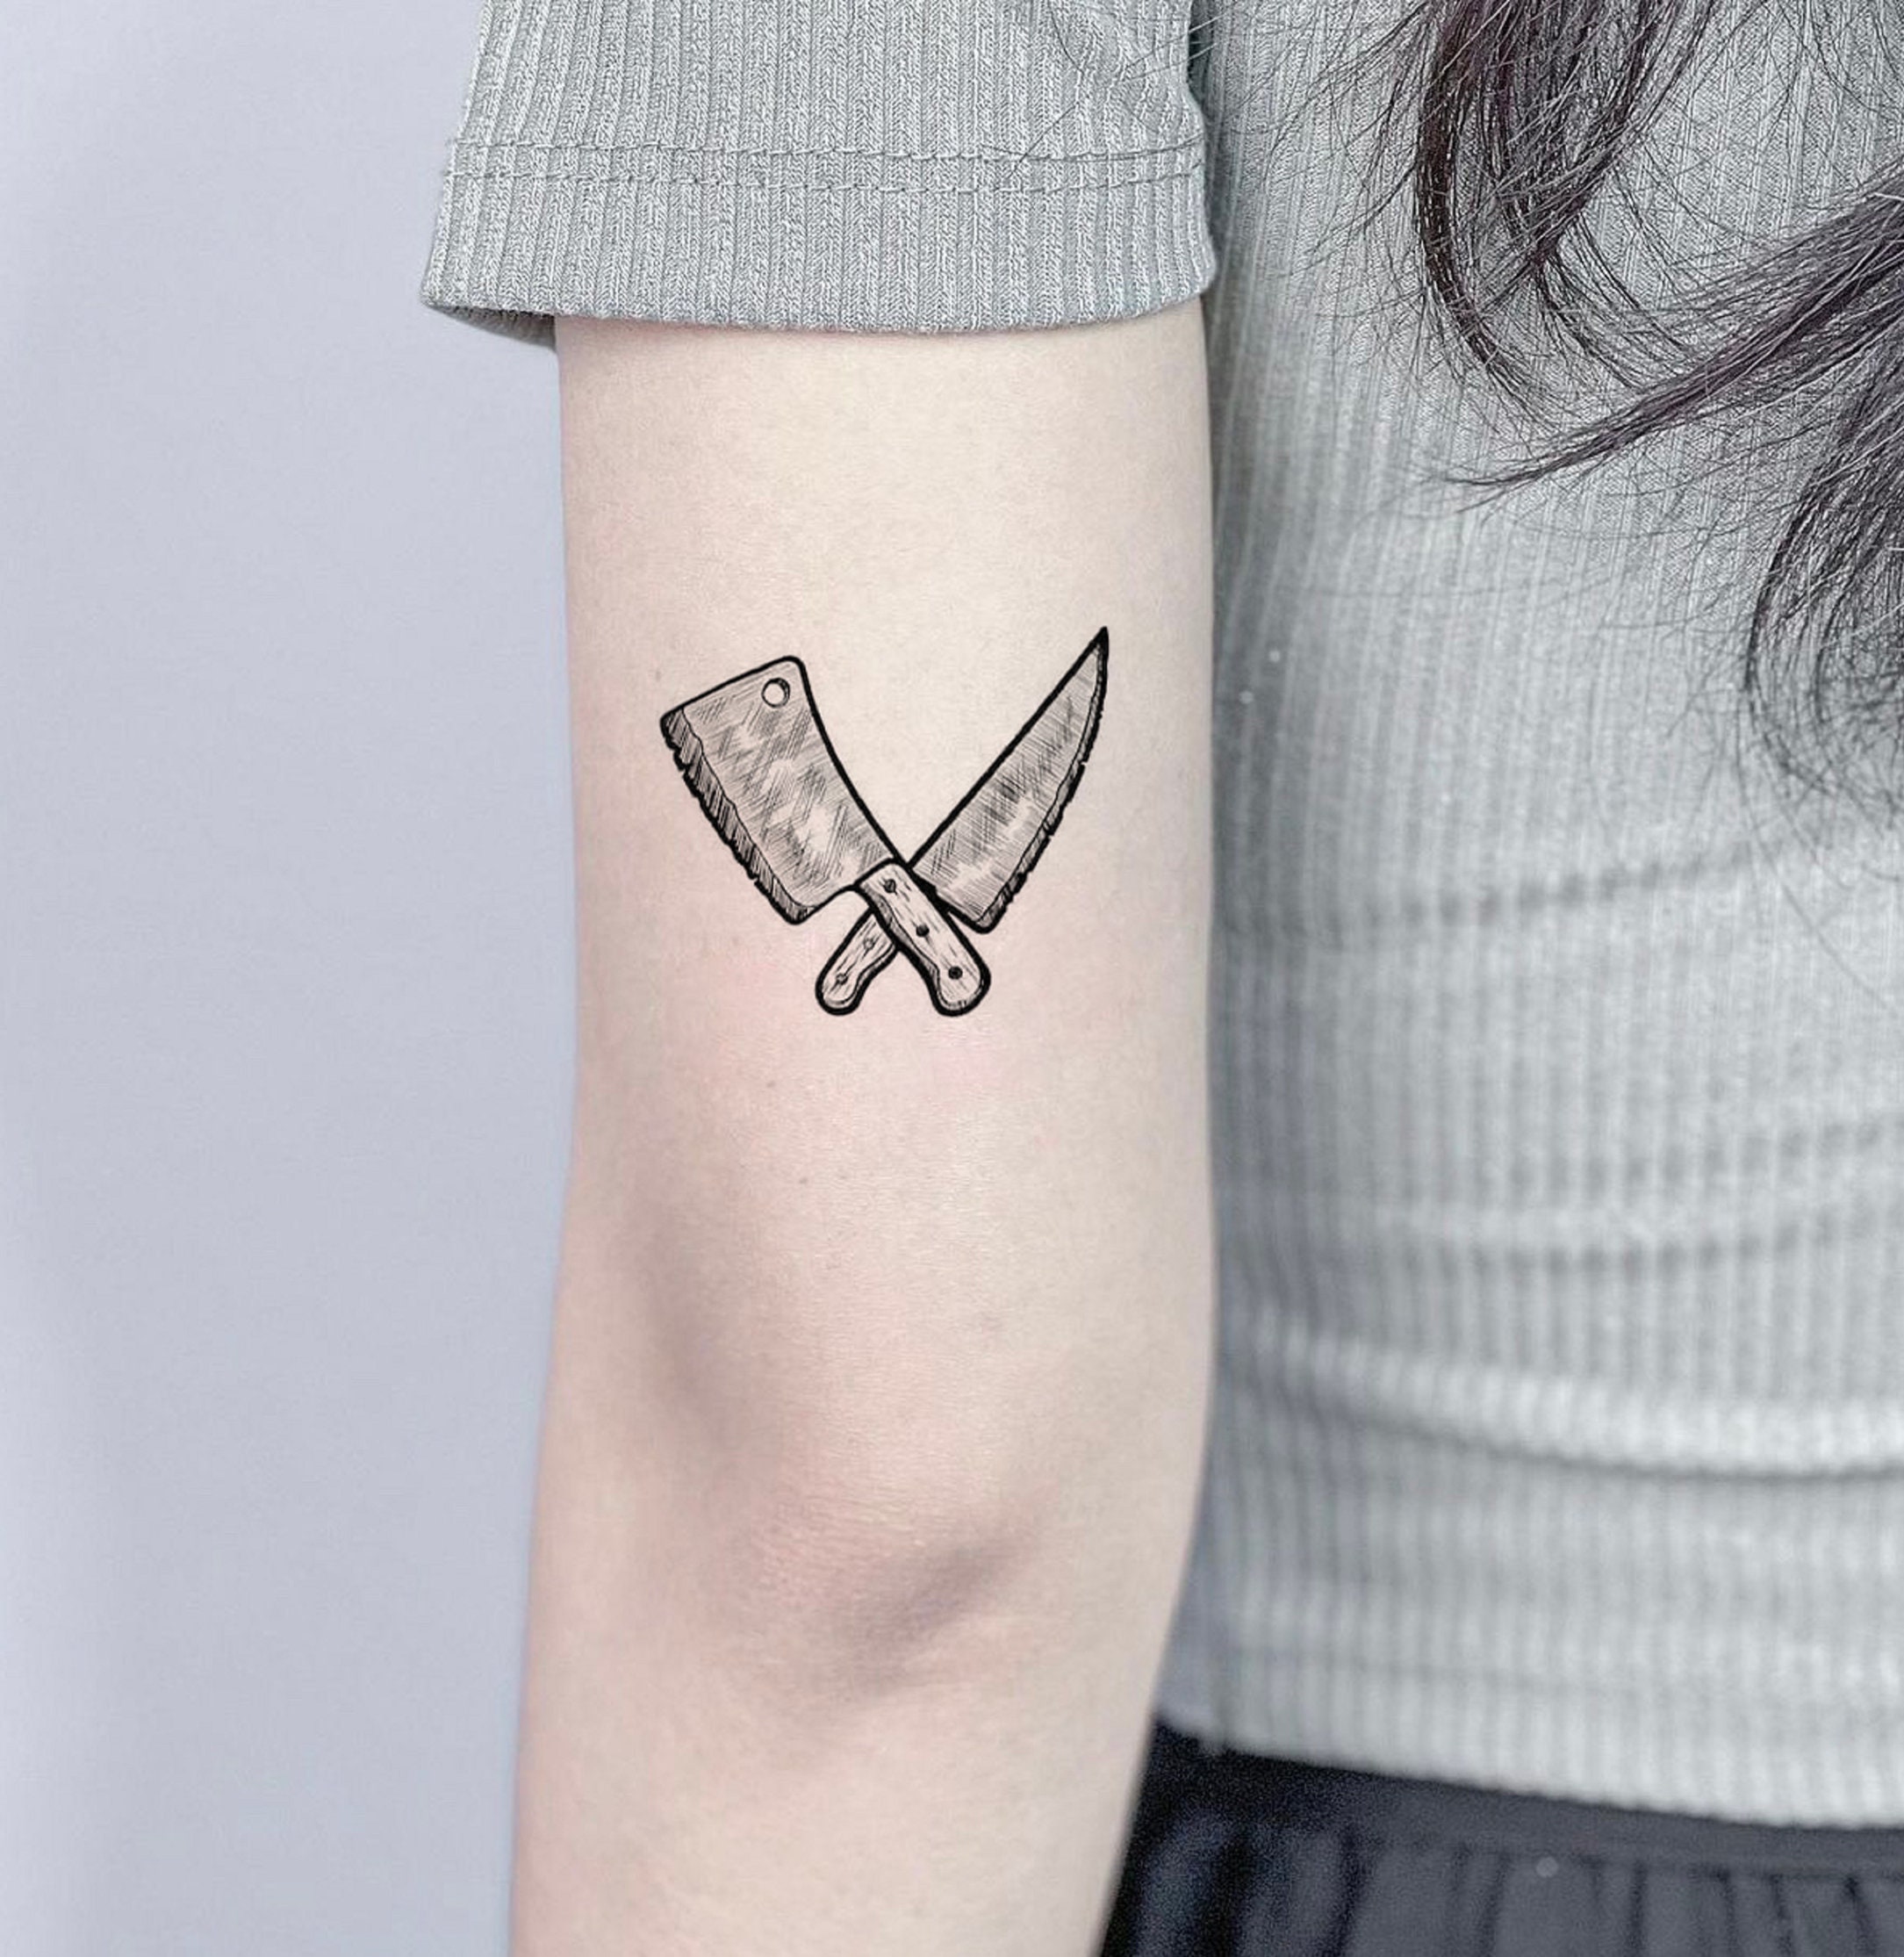 Tattoo uploaded by jywicked • Fork and knife tattoo by Nessa PUSKAS  https://www.instagram.com/nessa.puskas/ • Tattoodo